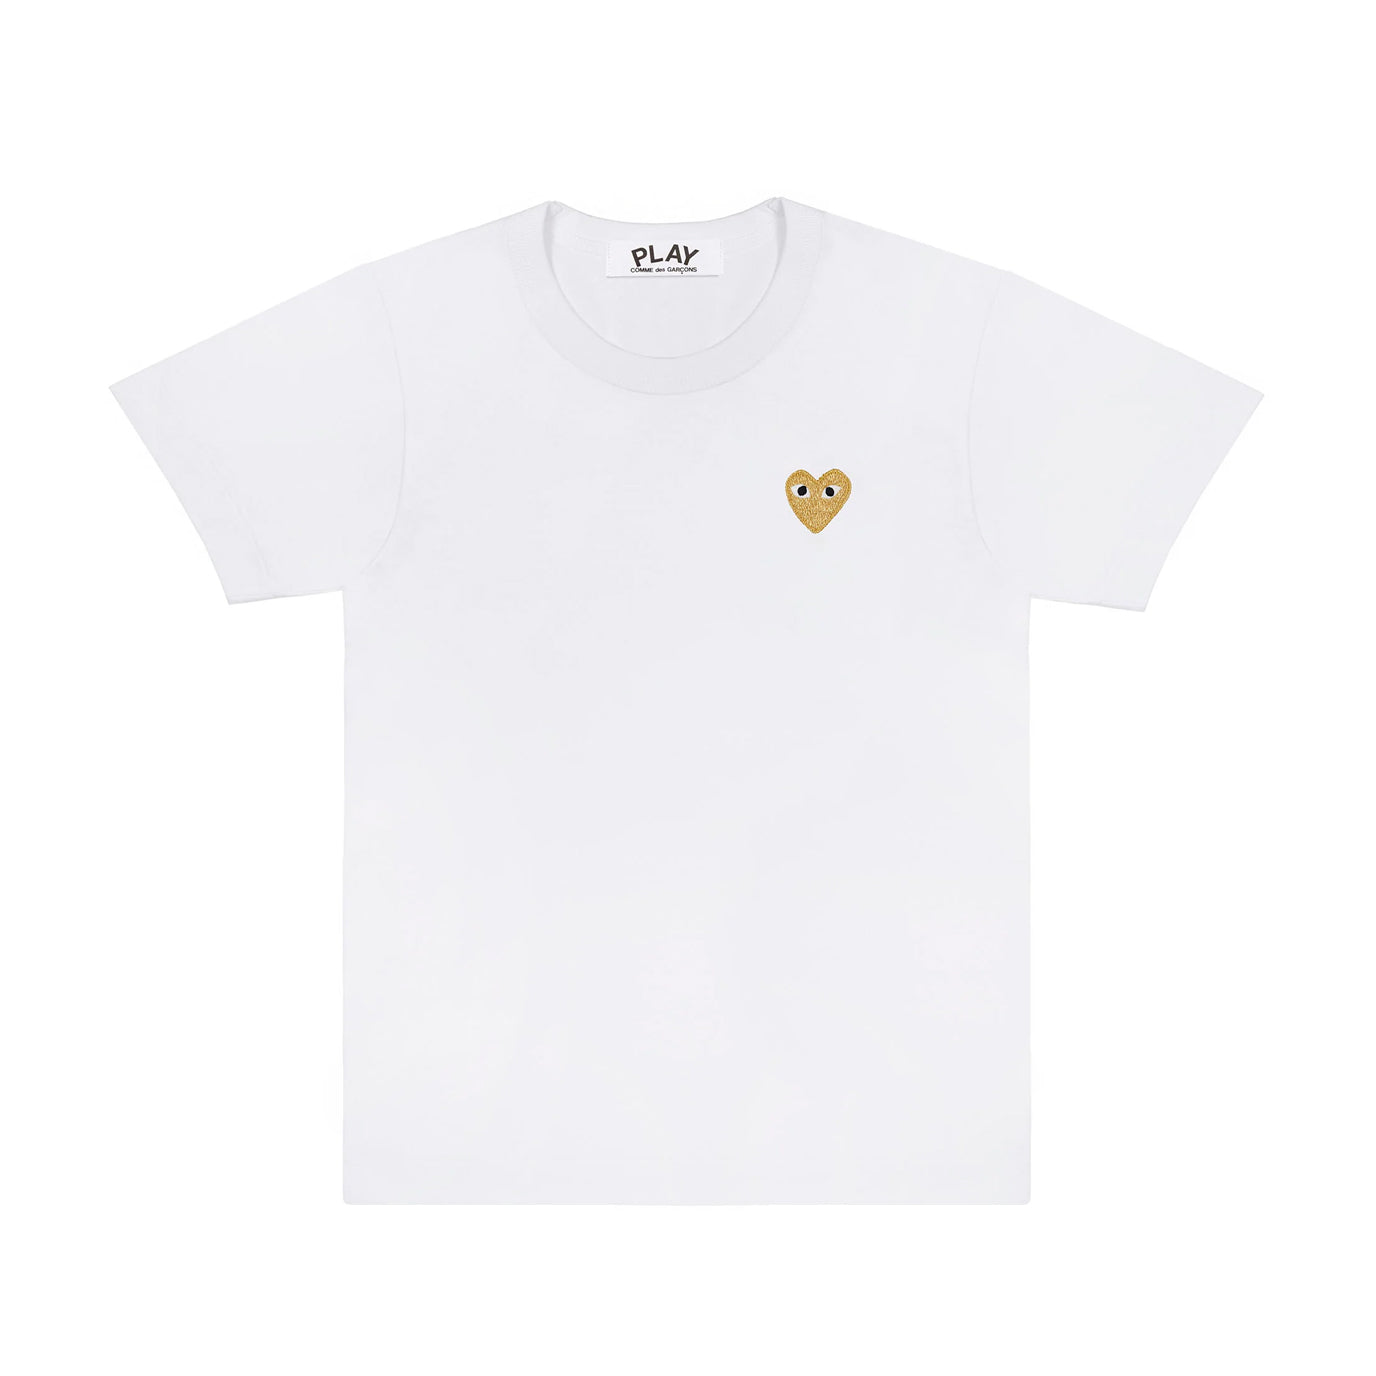 Play CDG Gold Heart White T-Shirt